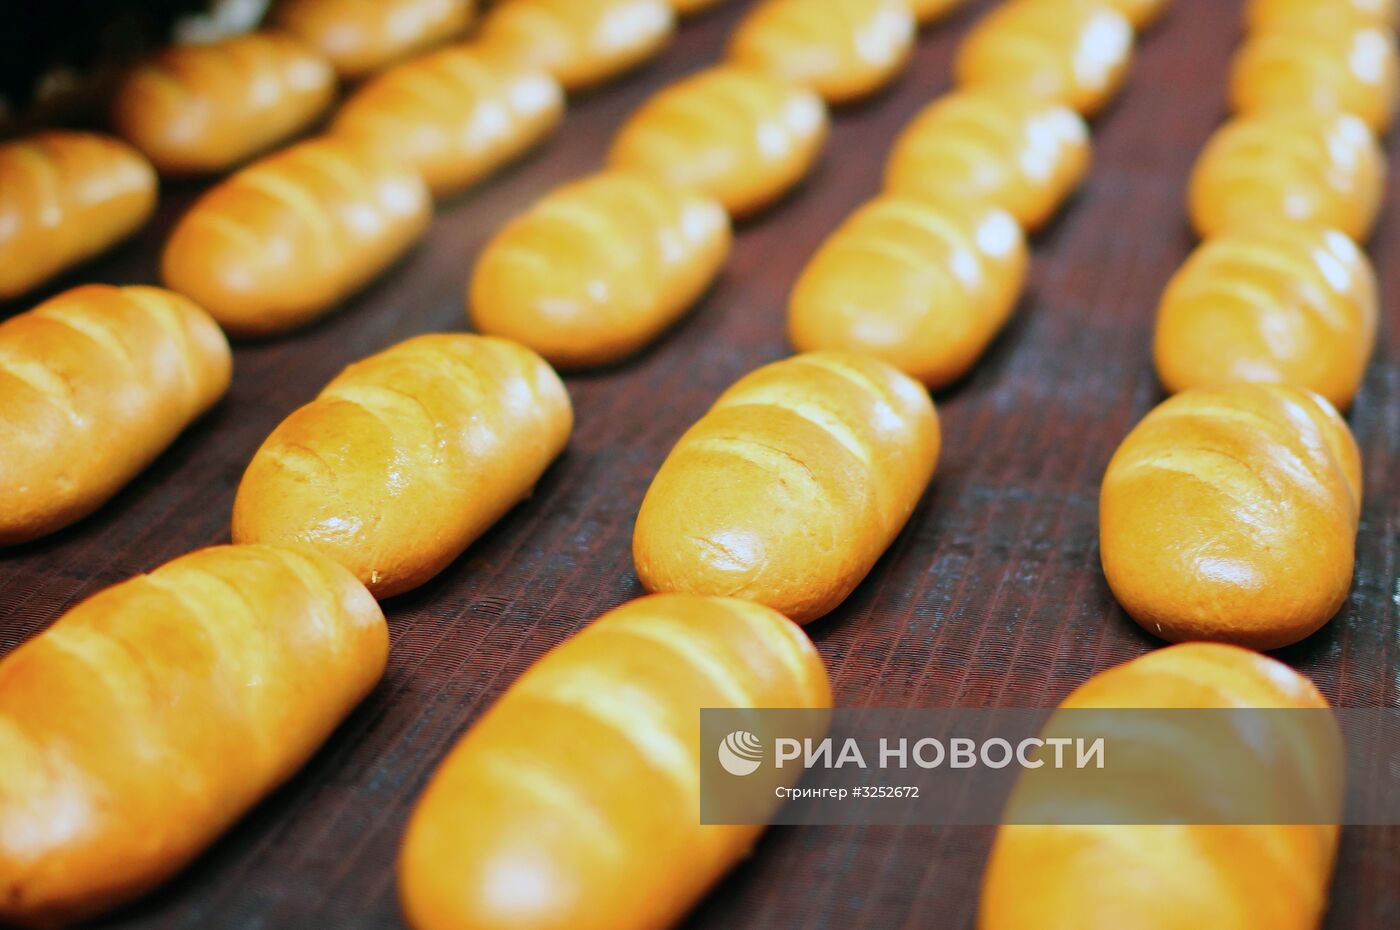 Хлебокомбинат в Луганске